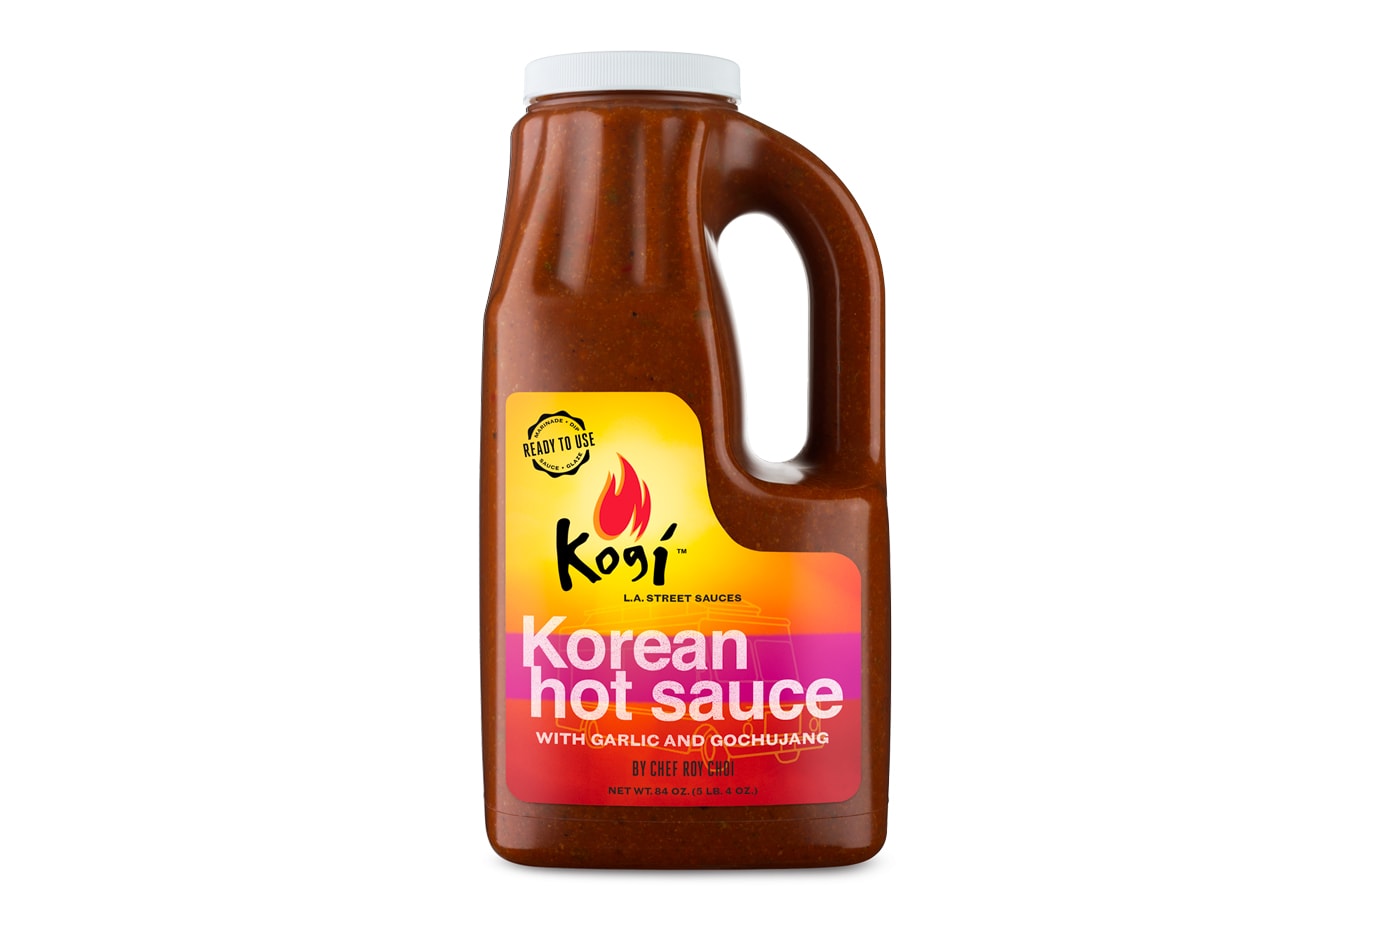 Kogi Korean BBQ L.A. Street Sauces Launch Buy Taste Review Roy Choi